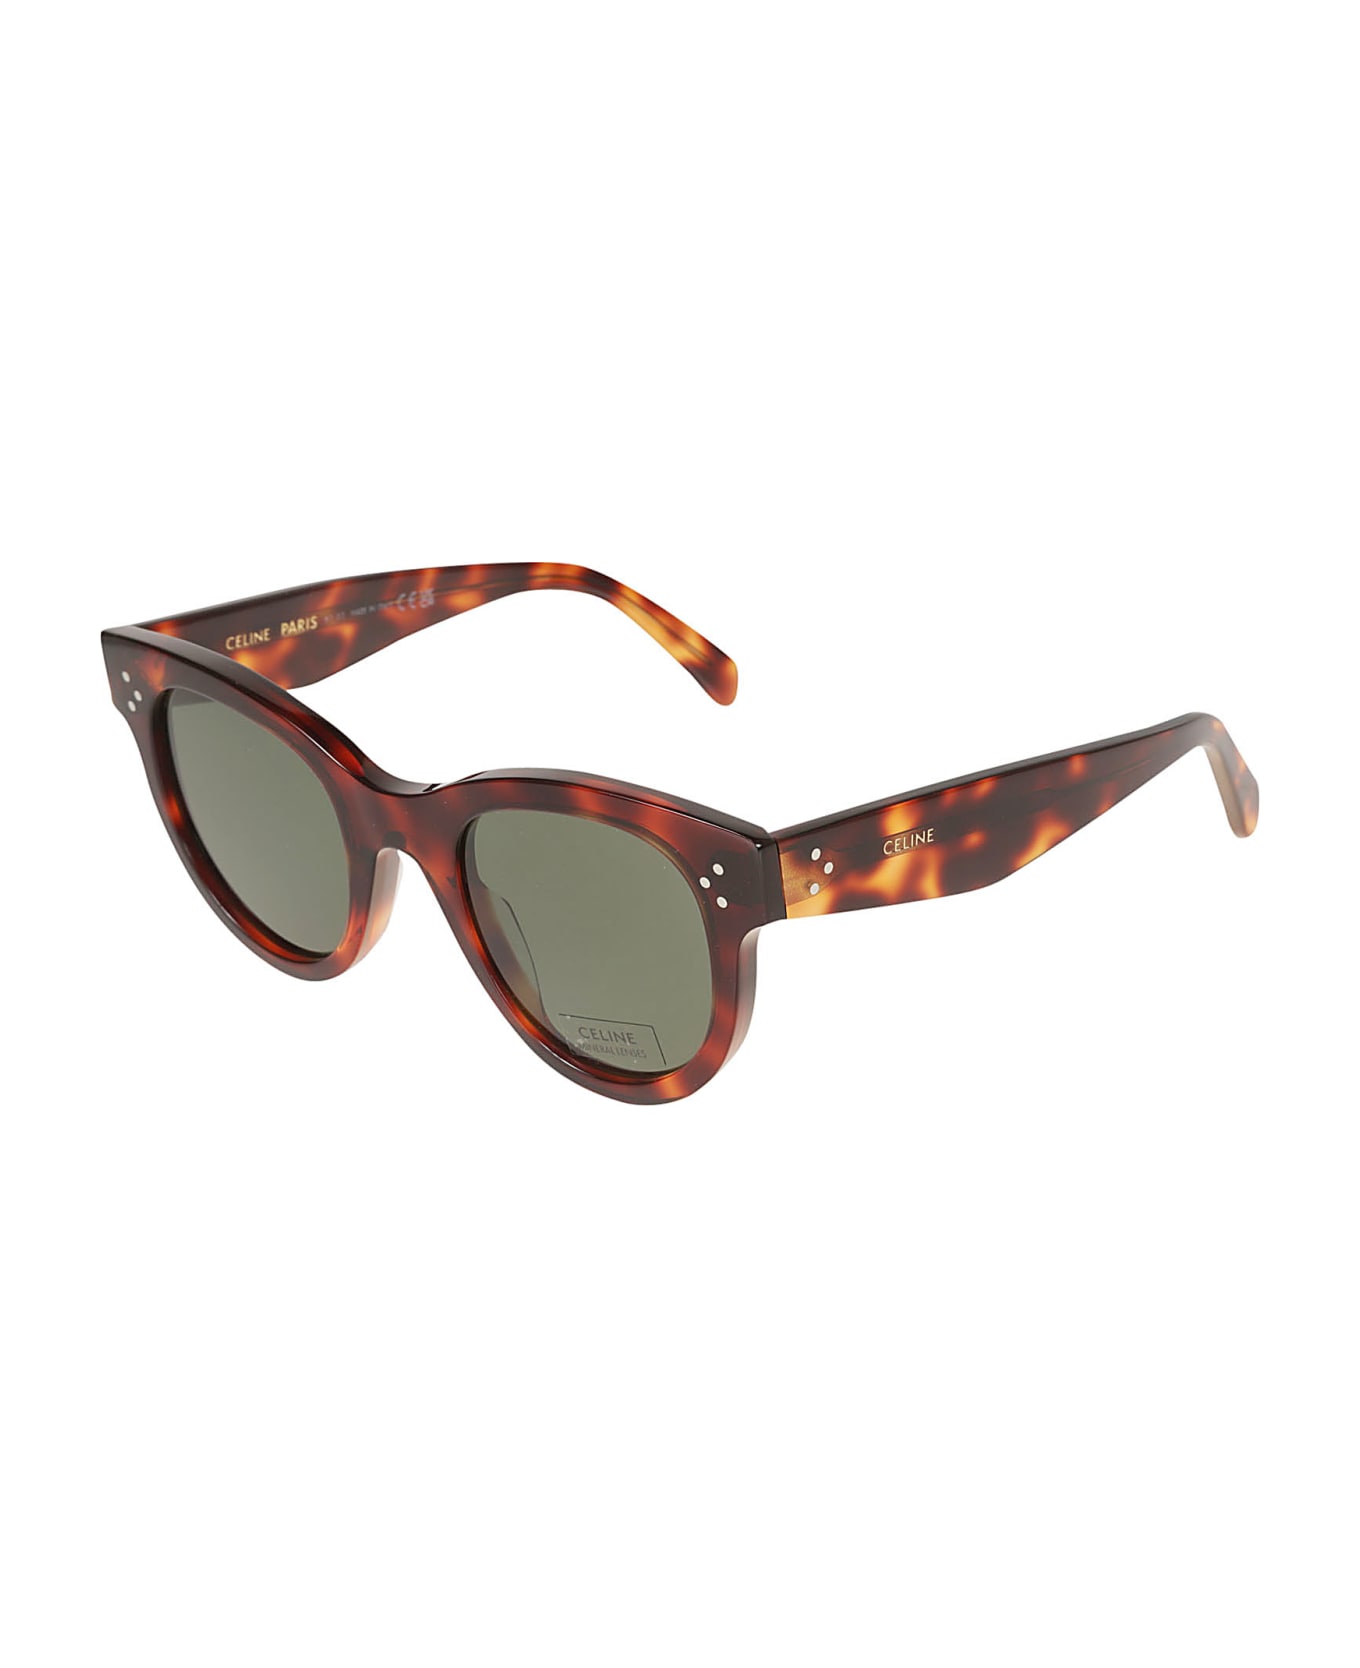 Celine Classic Round Sunglasses - Brown